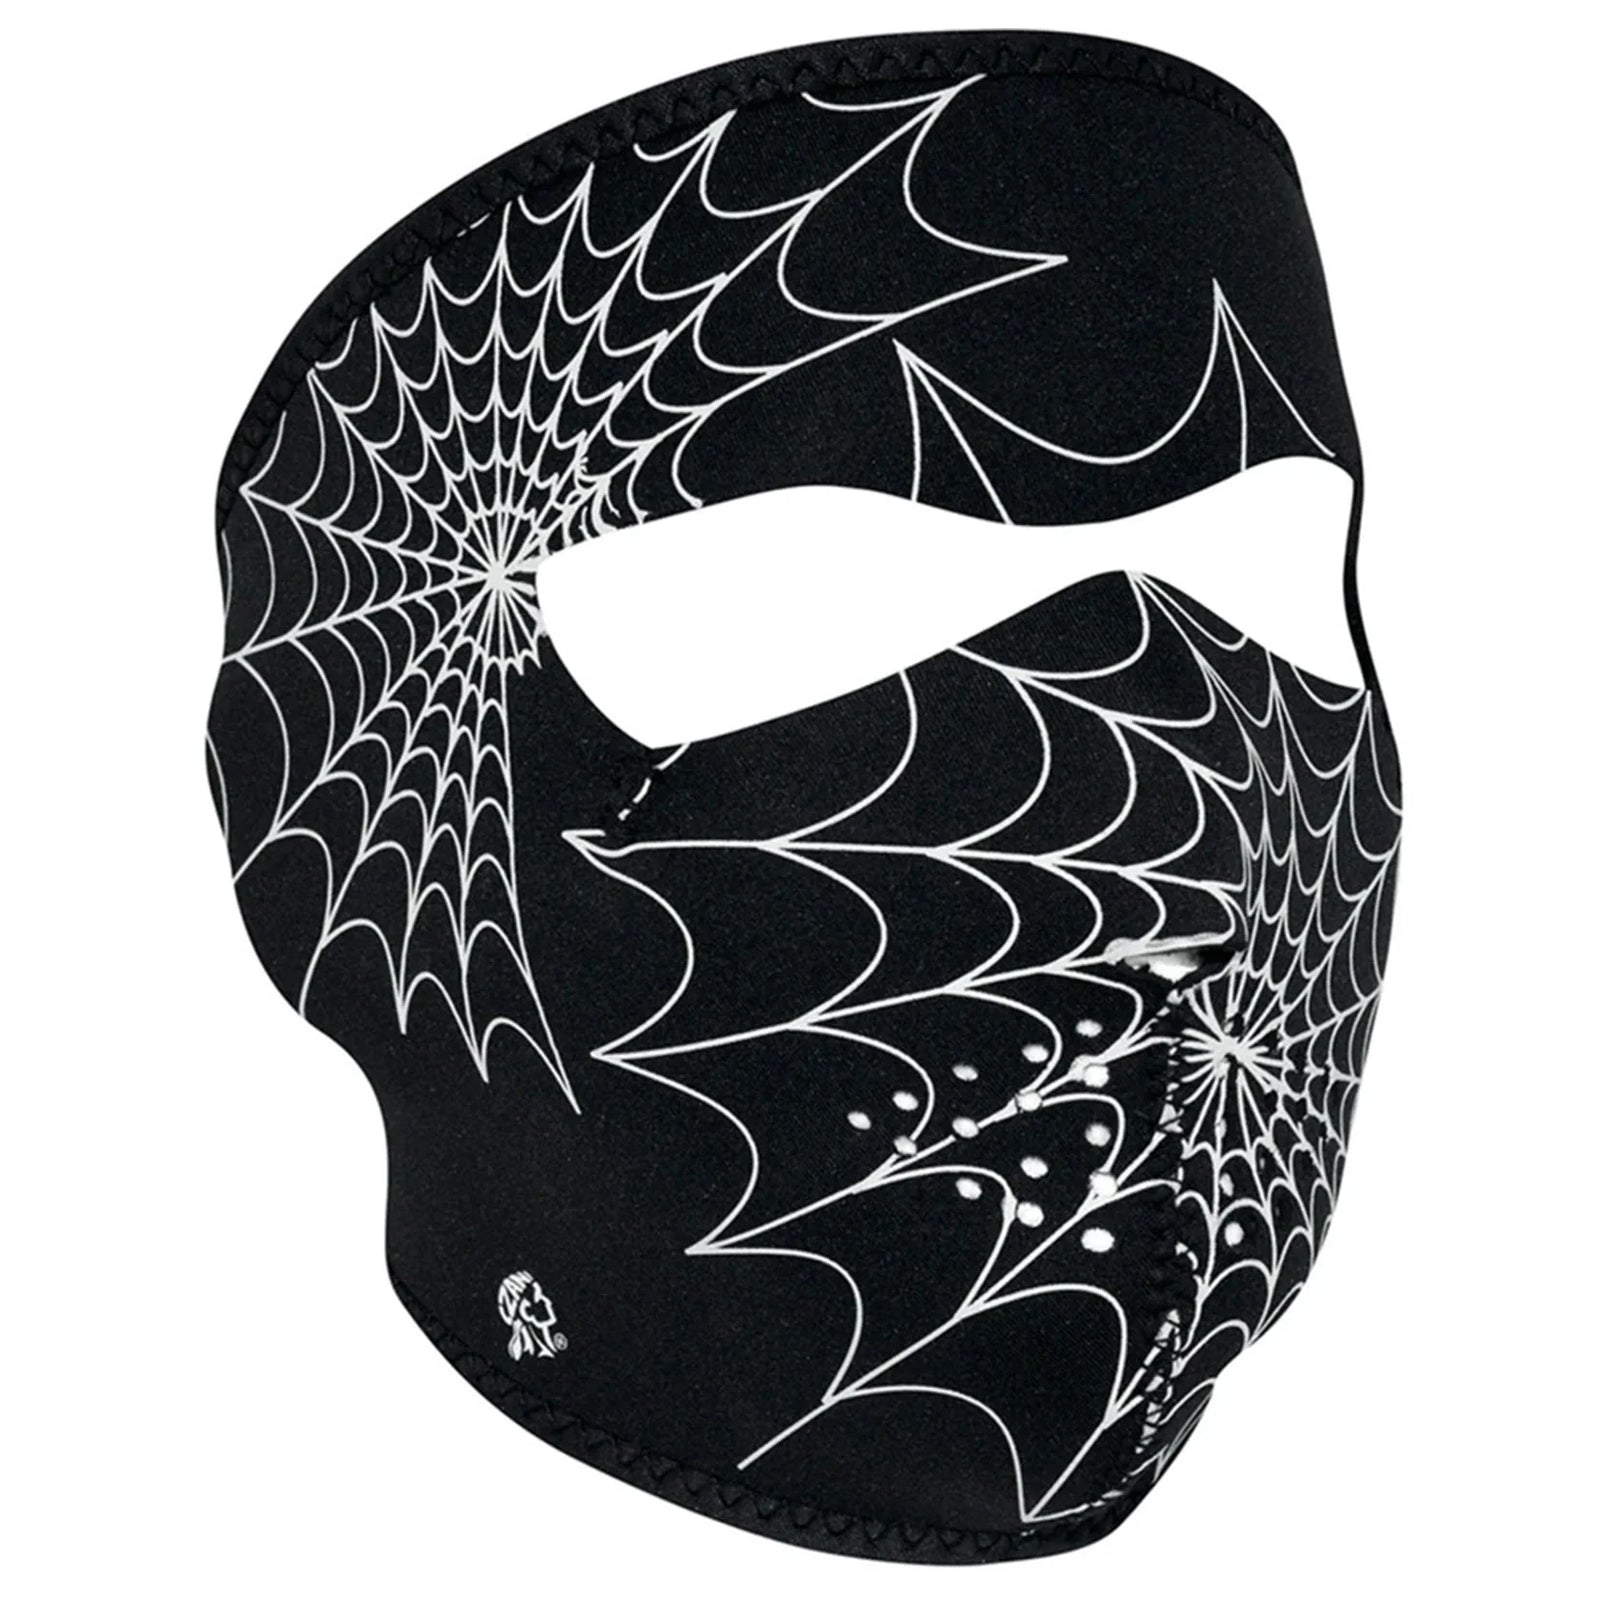 Zan Headgear Glow In The Dark Spider Web Full Adult Face Masks 